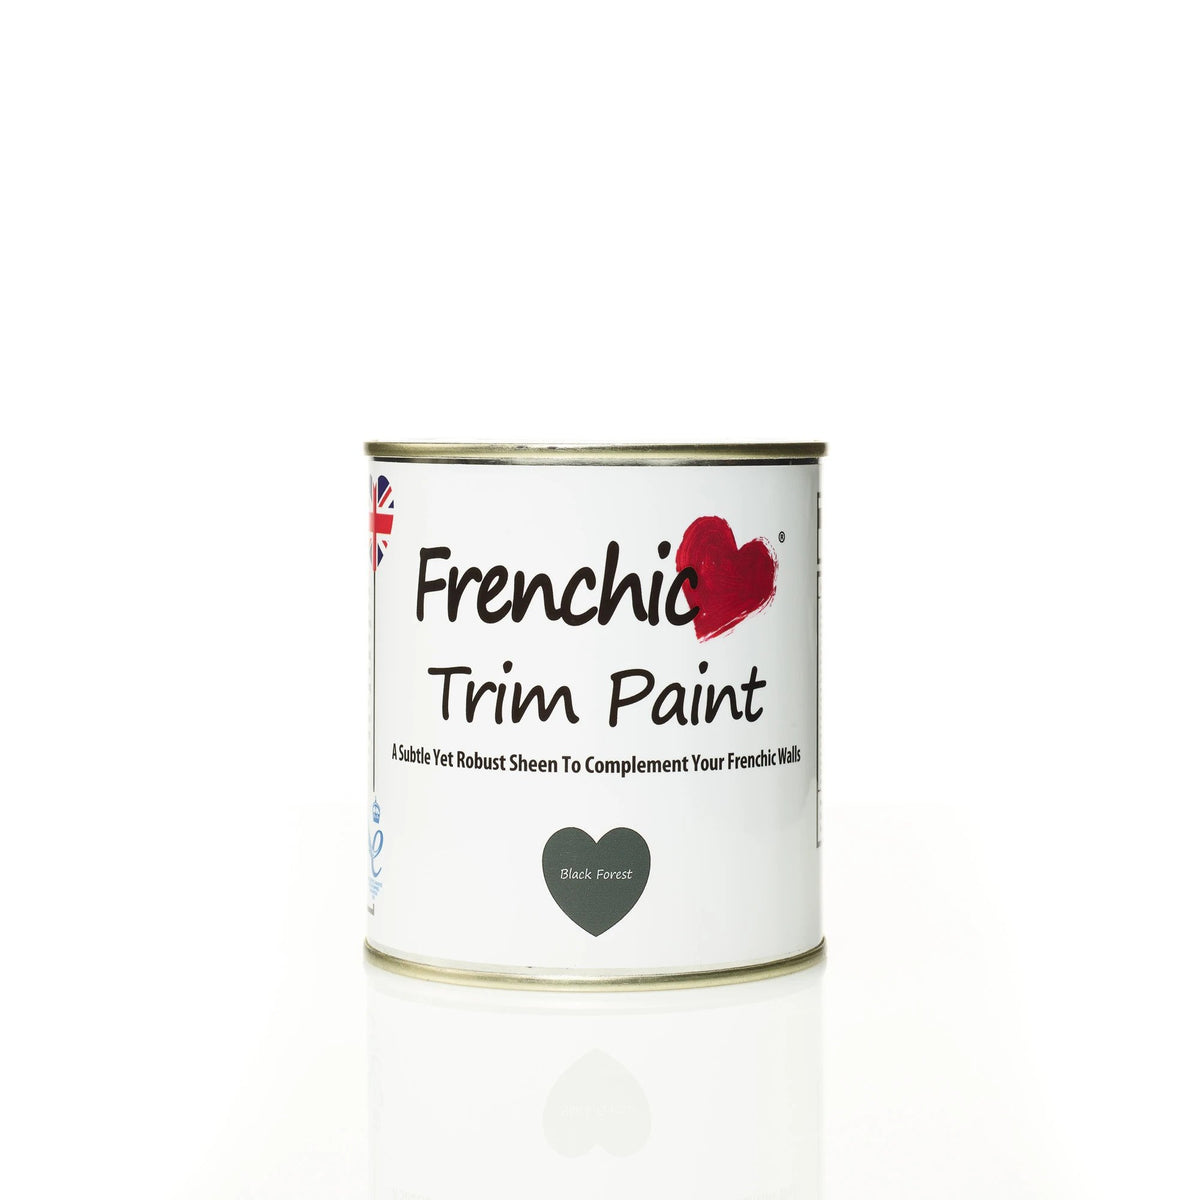 Trim Paint musta listamaali Frenchic Paint Finland.